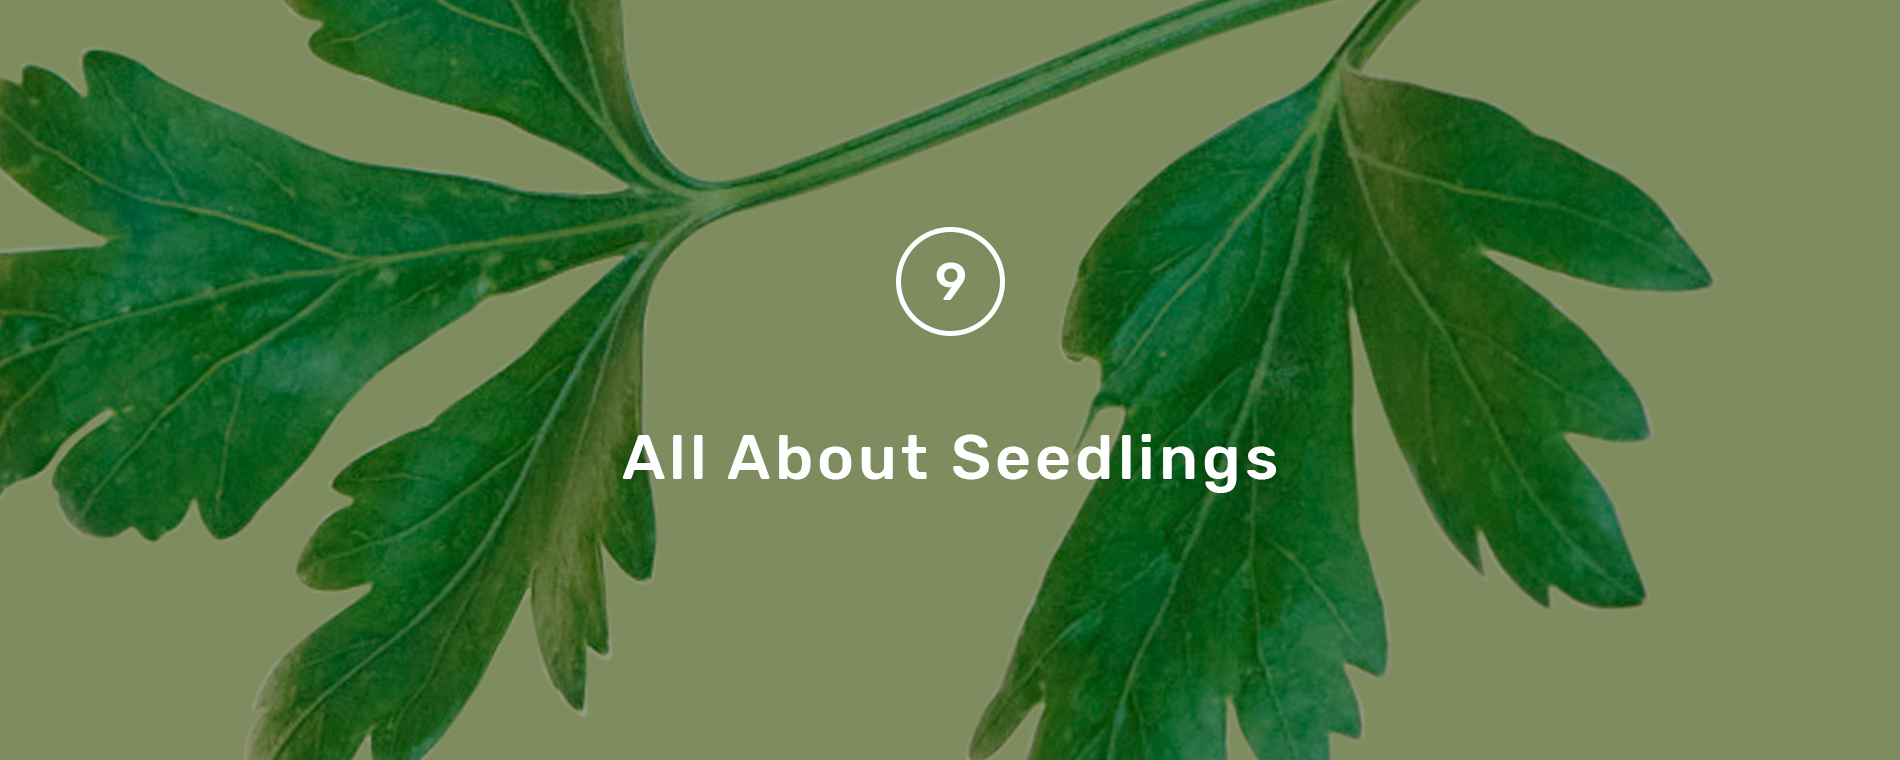 all_about_seedlings_hero